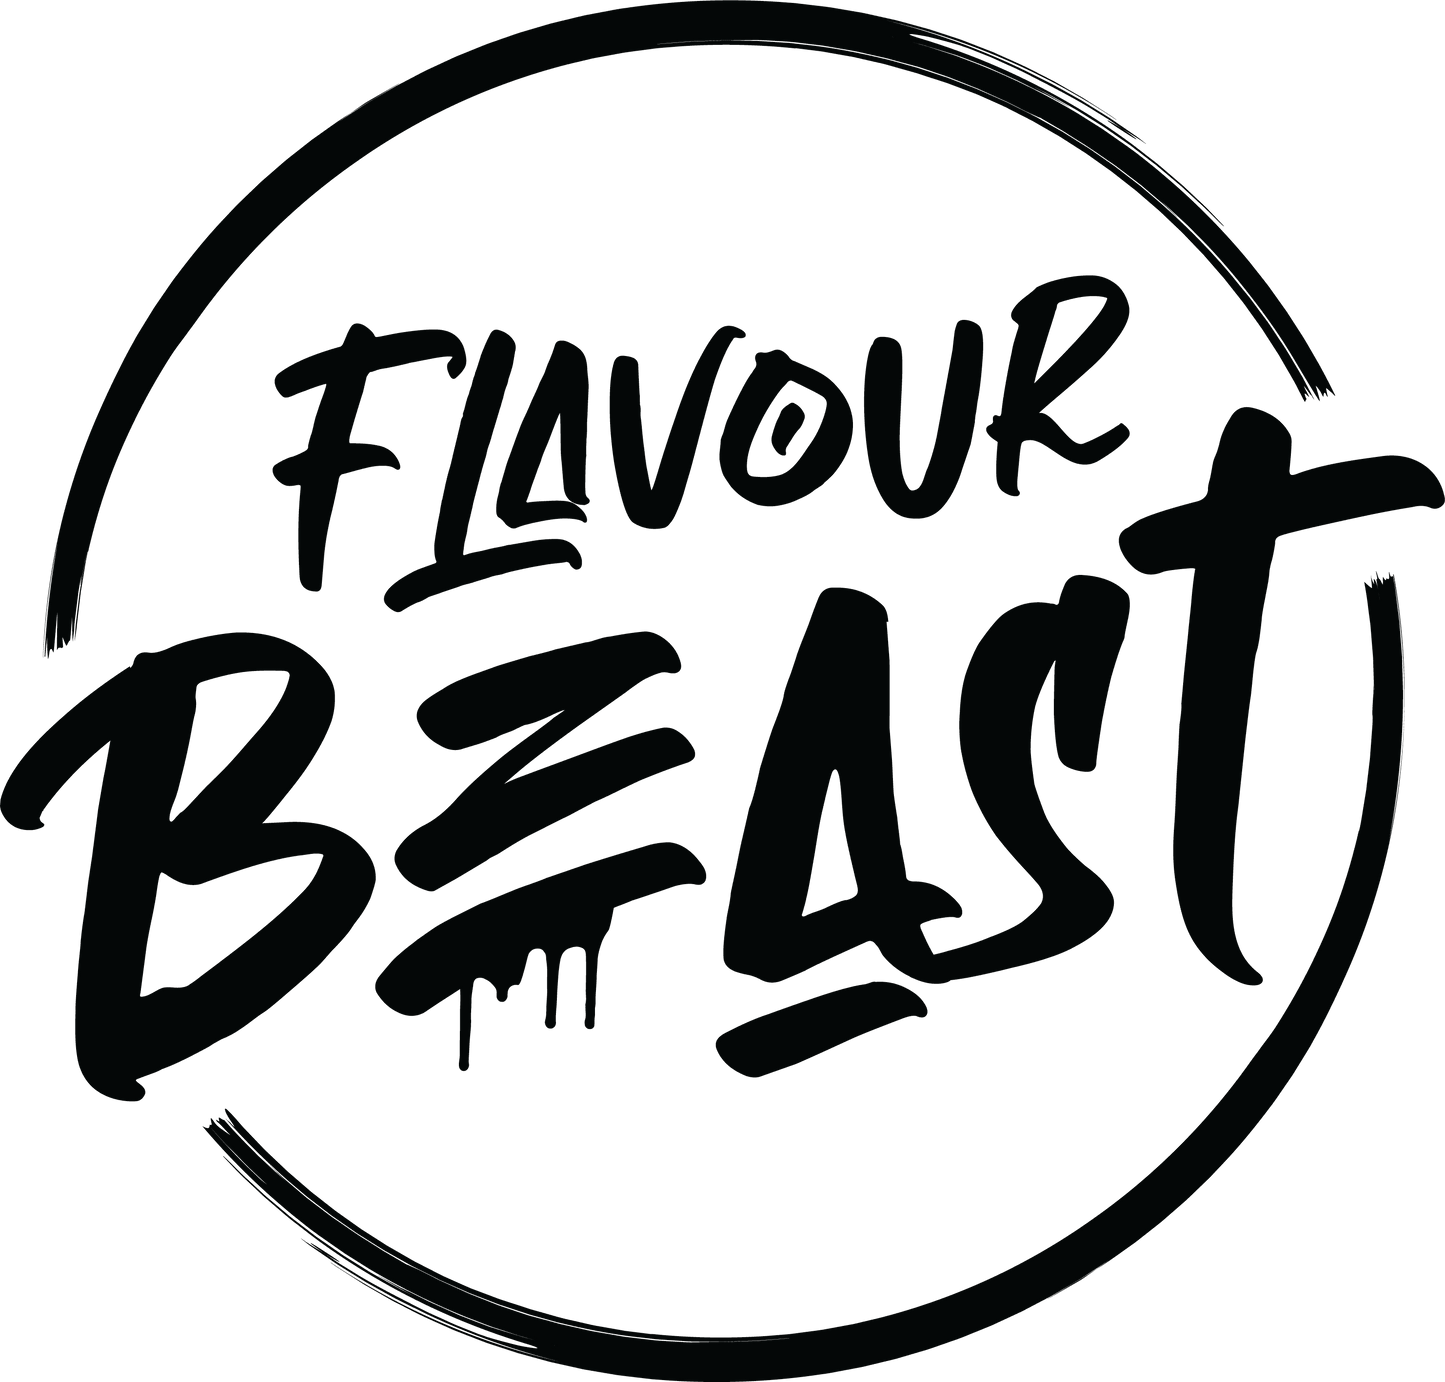 Flavour Beast Flow 4000 Puff Disposable Vape